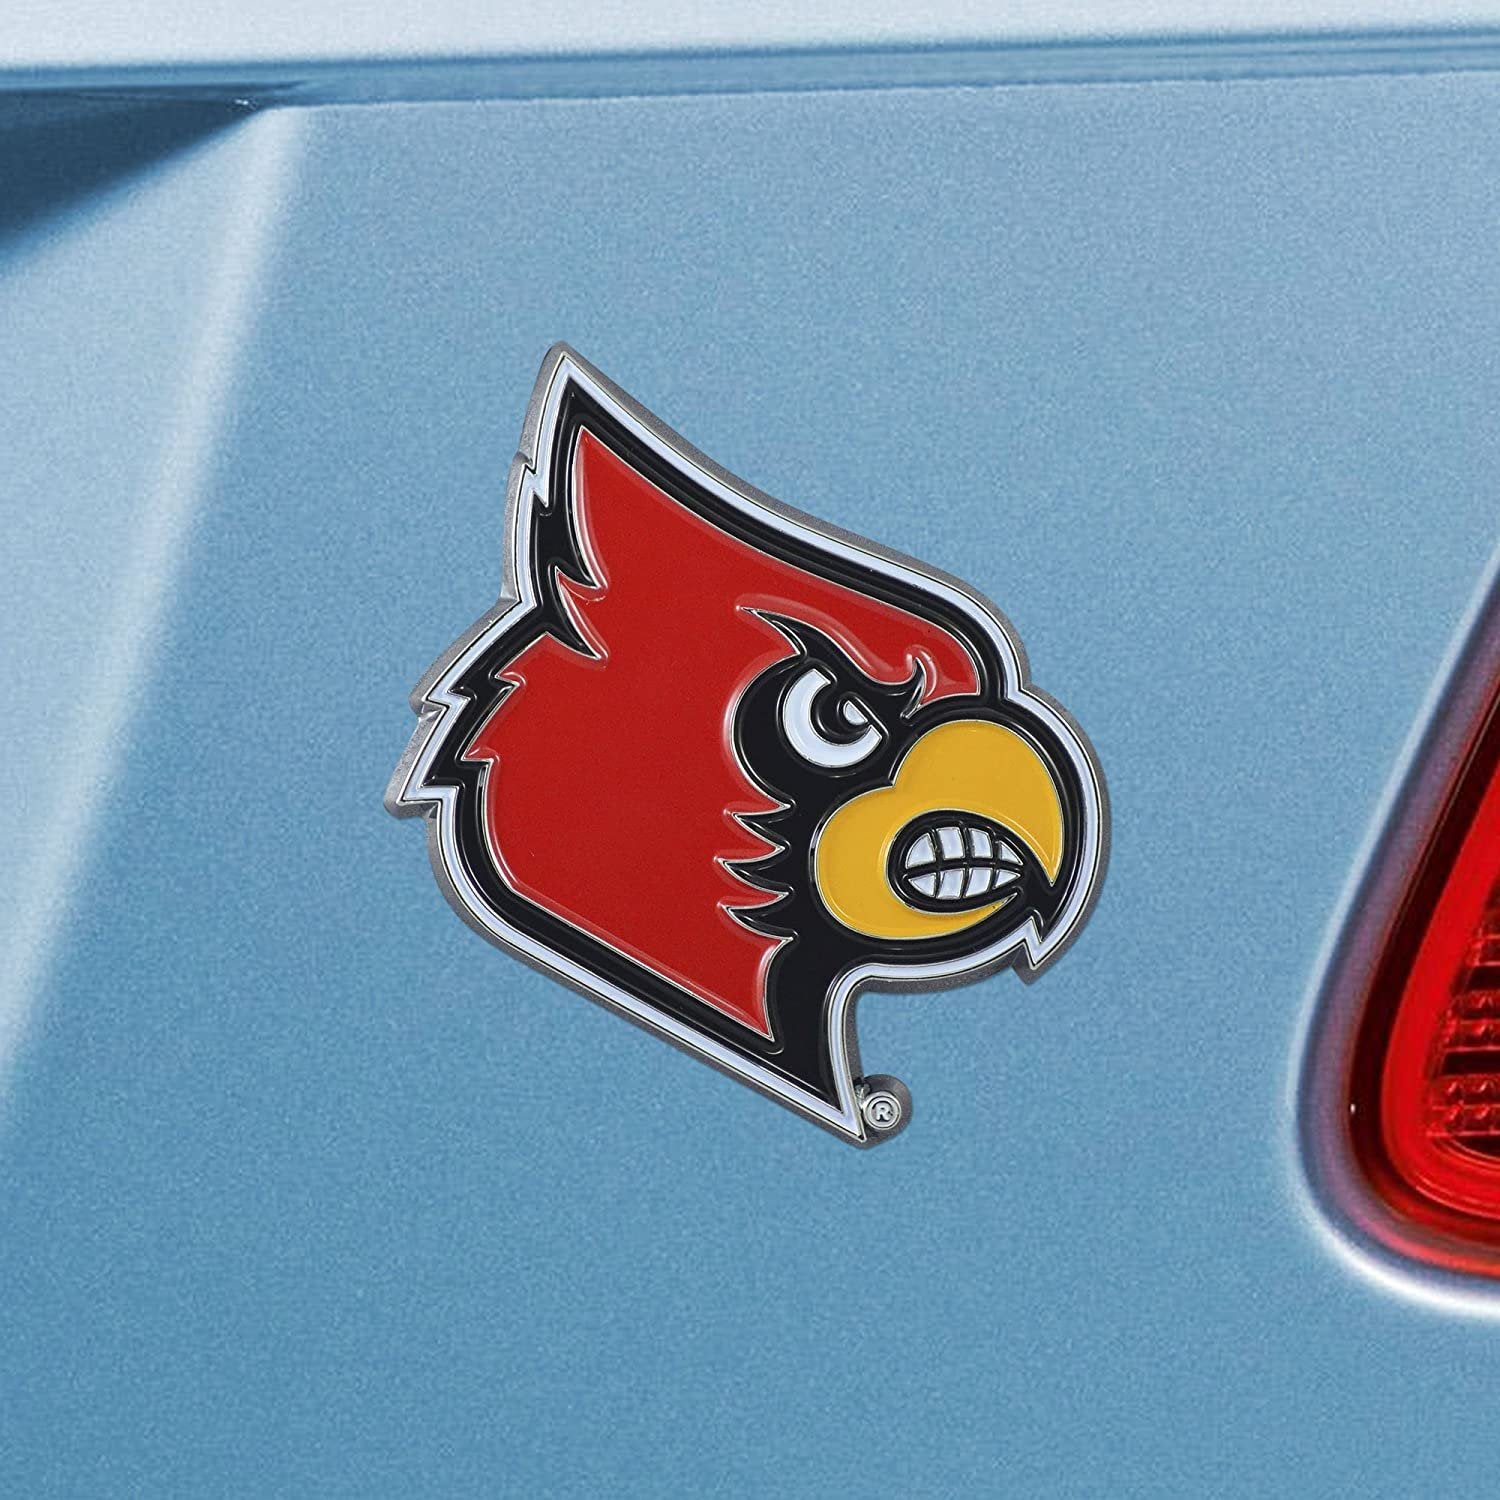 University of Louisville Cardinals Premium Solid Metal Raised Auto Emblem, Team Color, Shape Cut, Adhesive Backing